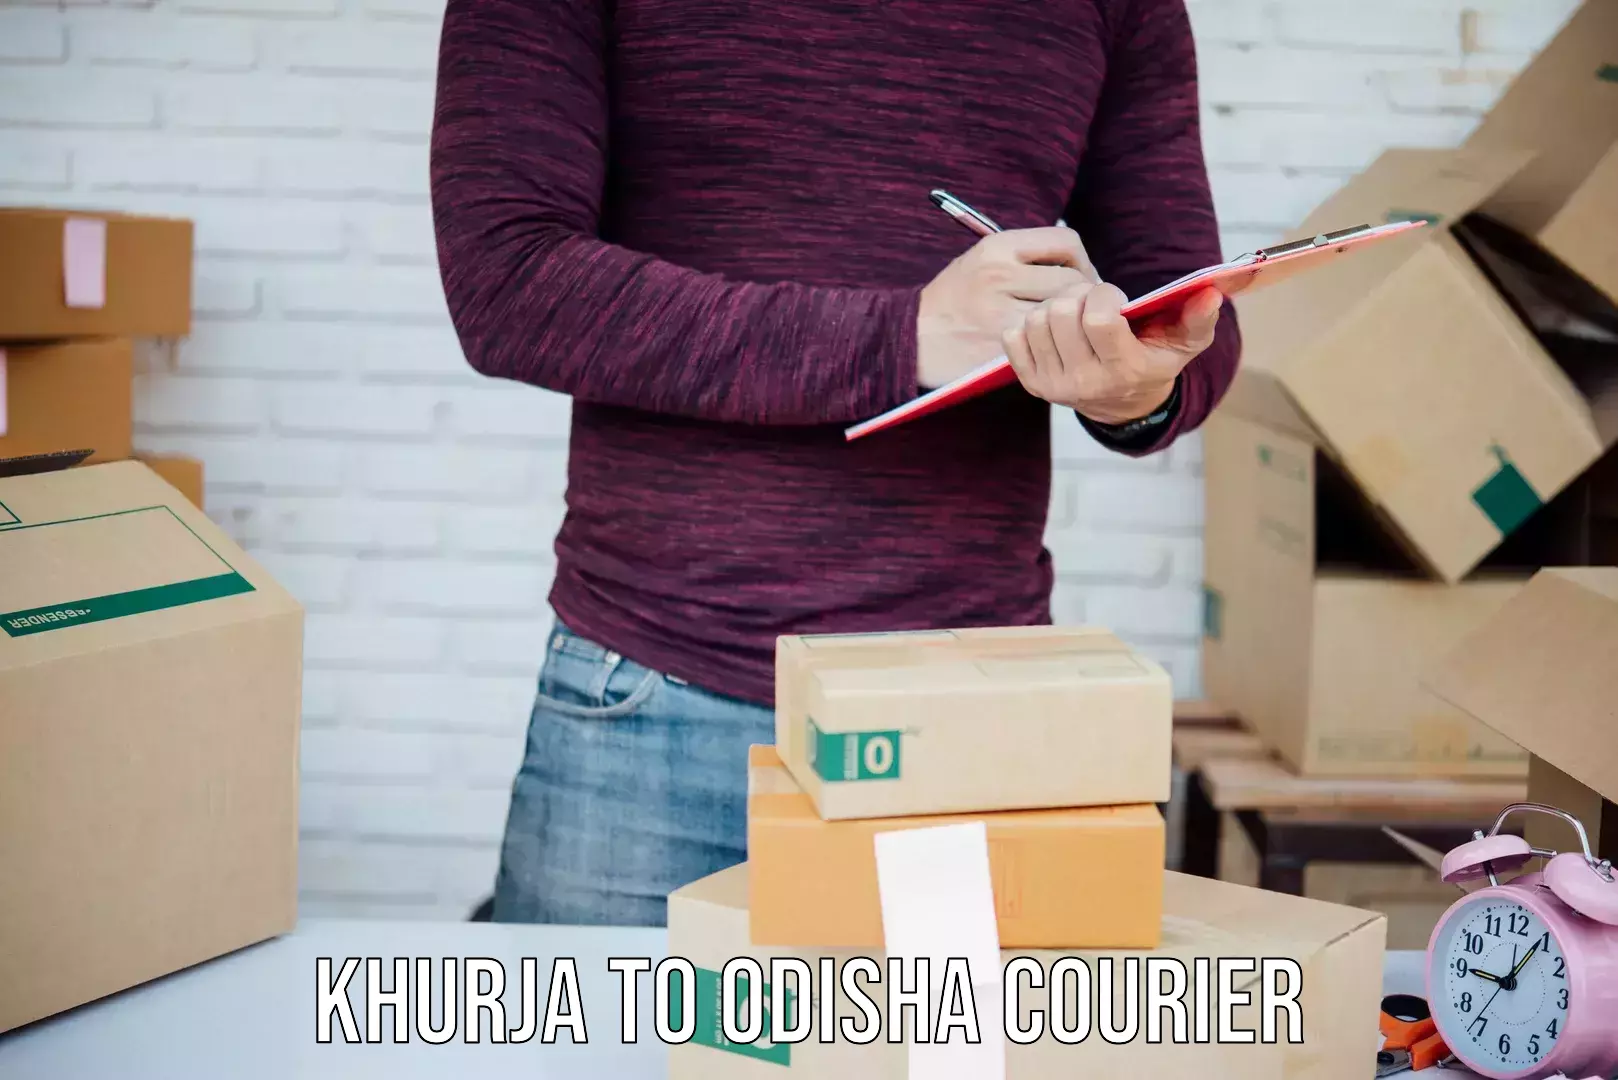 Same-day delivery options Khurja to Odisha